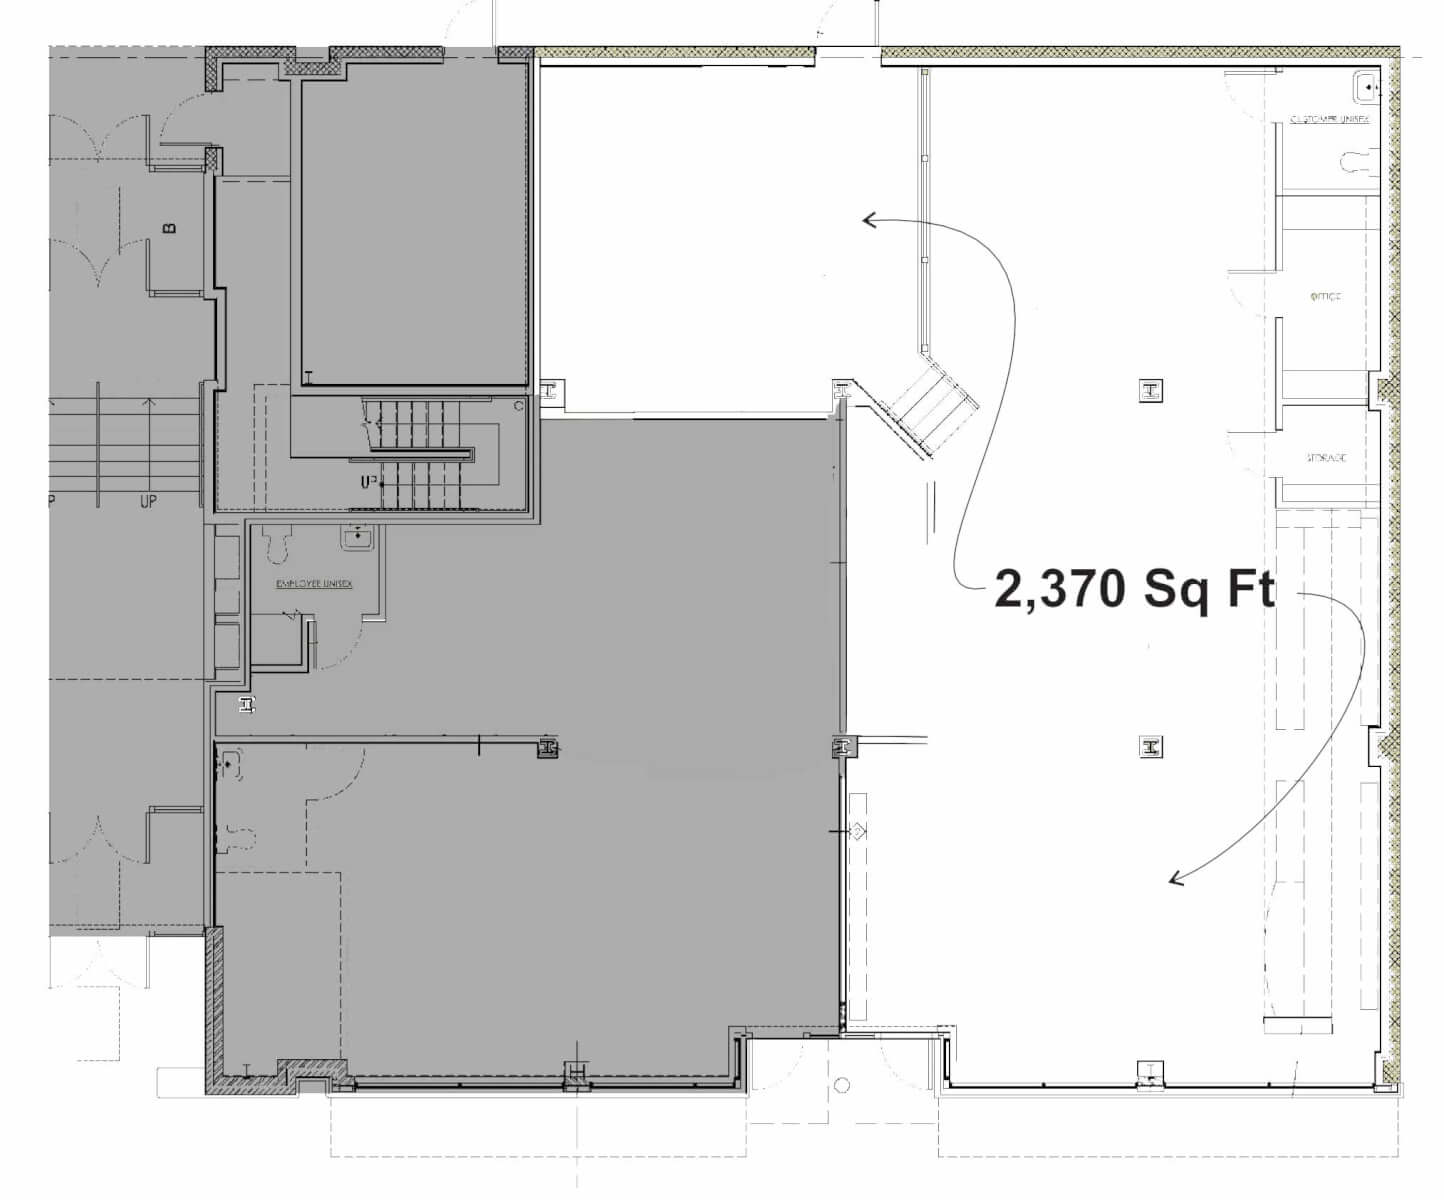 661 South Avenue commercial space floorplan